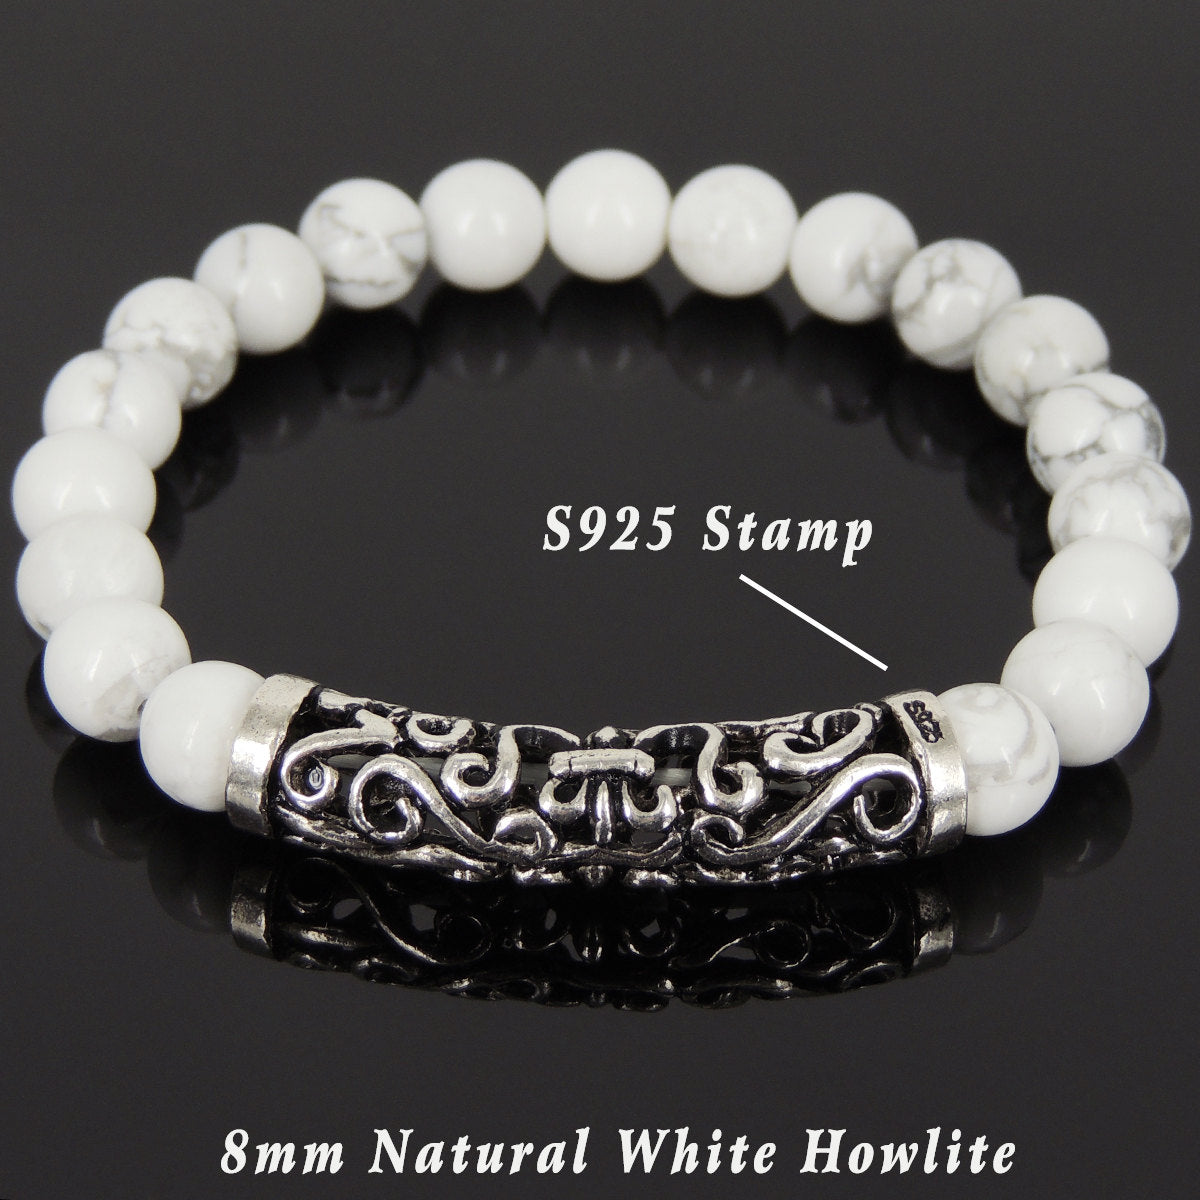 8mm White Howlite Healing Gemstone Bracelet with S925 Sterling Silver Celtic Fleur de Lis Charm - Handmade by Gem & Silver BR974